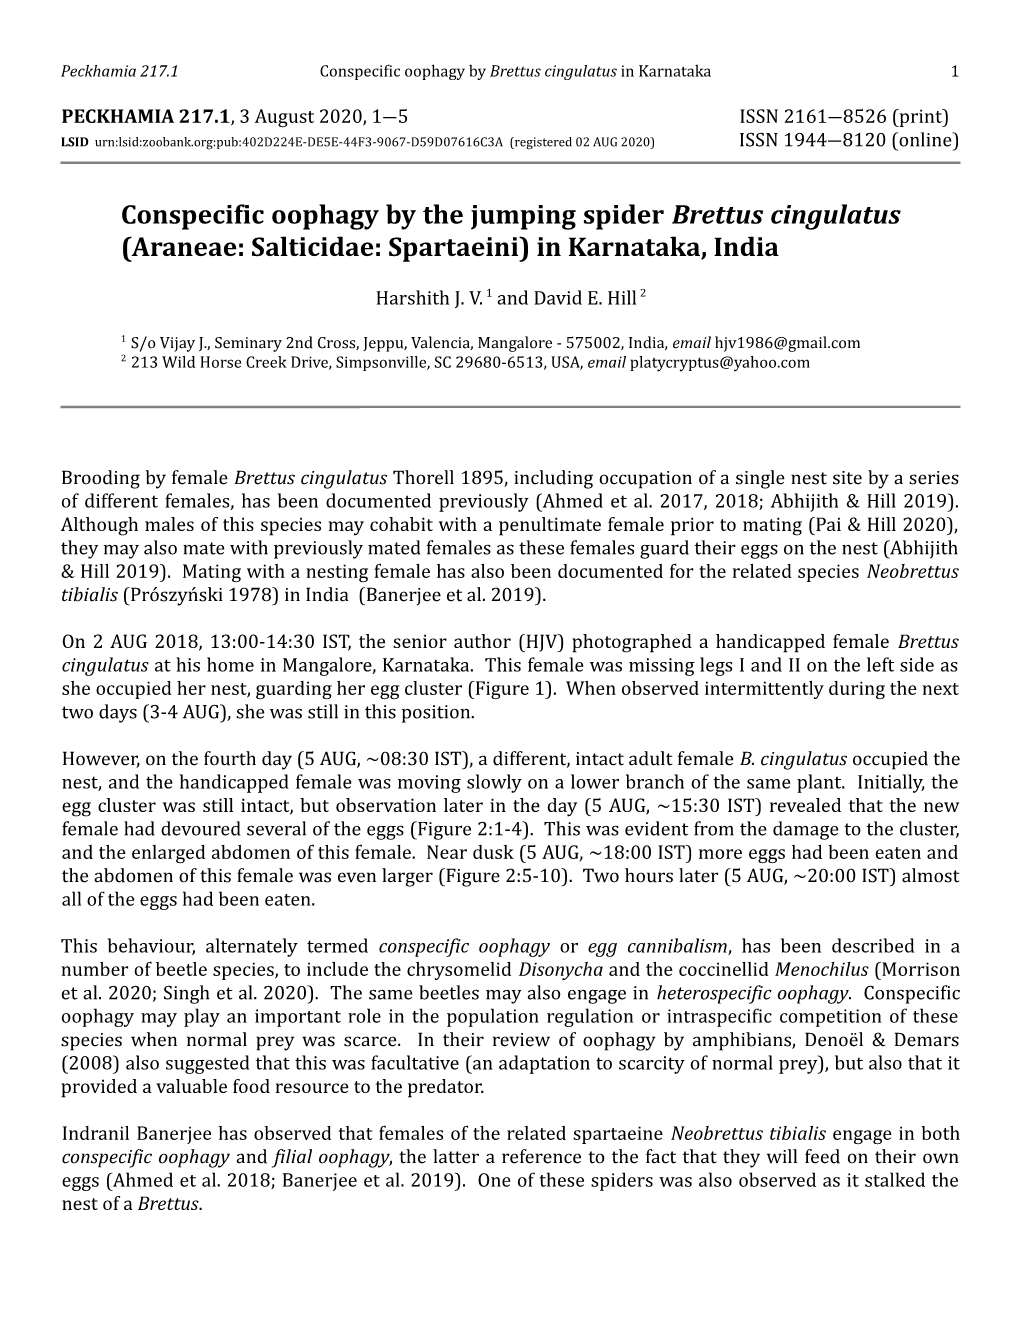 Conspecific Oophagy by the Jumping Spider Brettus Cingulatus (Araneae: Salticidae: Spartaeini) in Karnataka, India